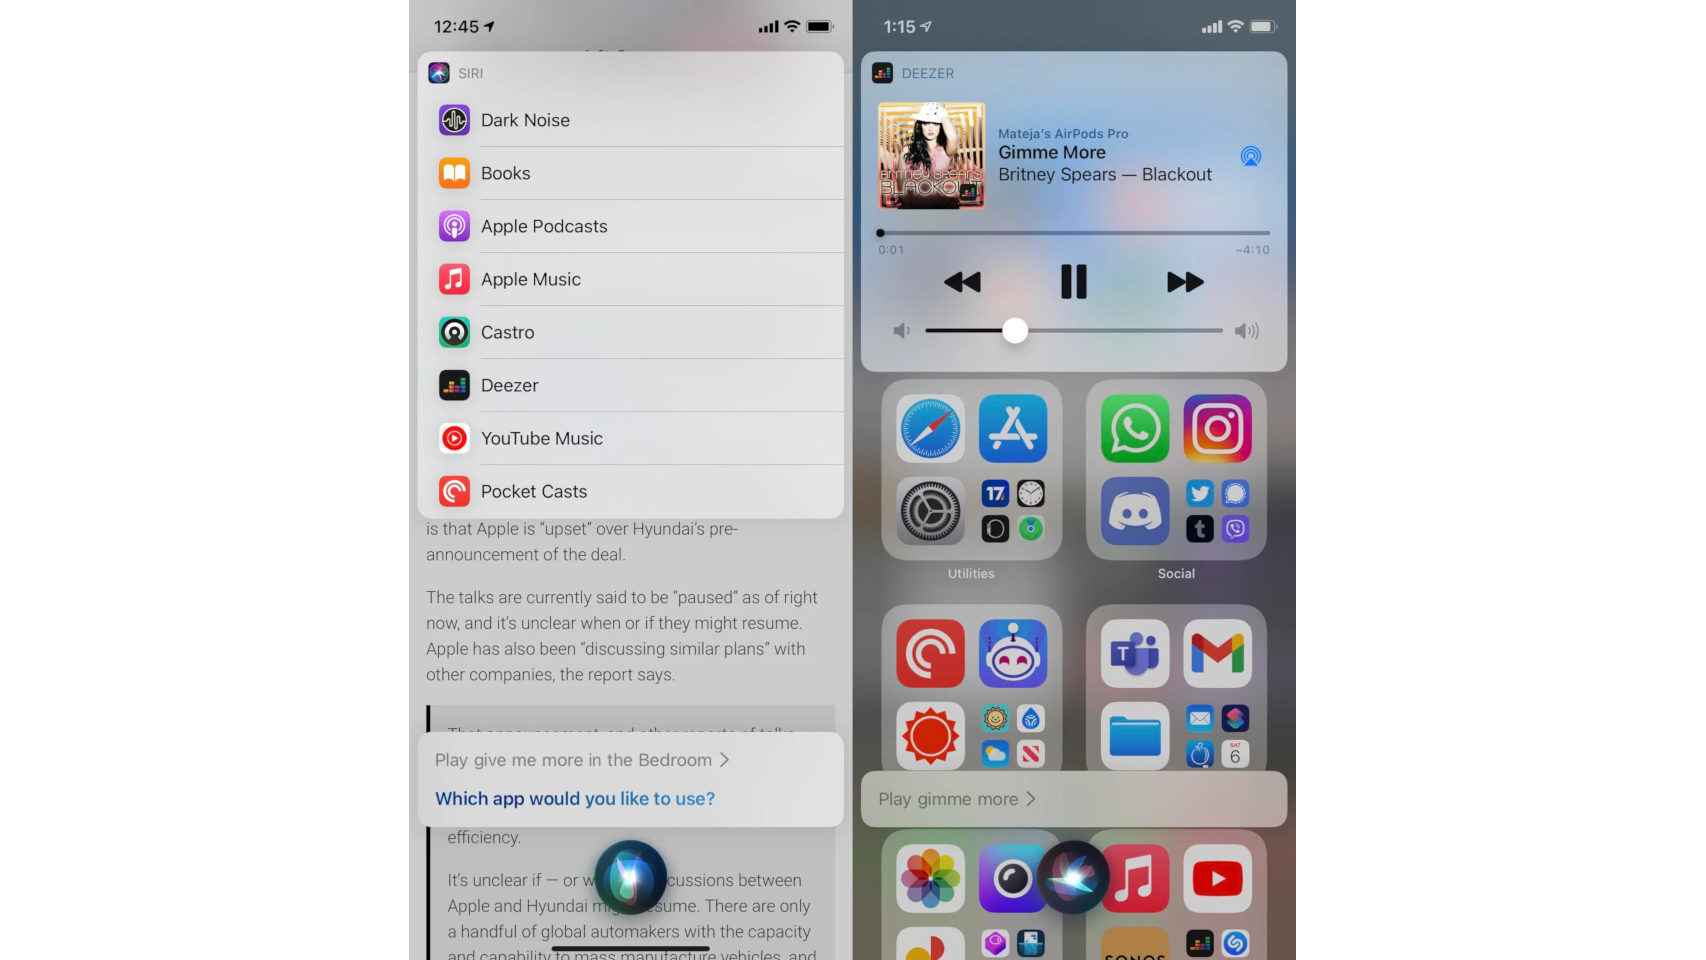 Siri podrá usar otras apps de música aparte de Apple Music